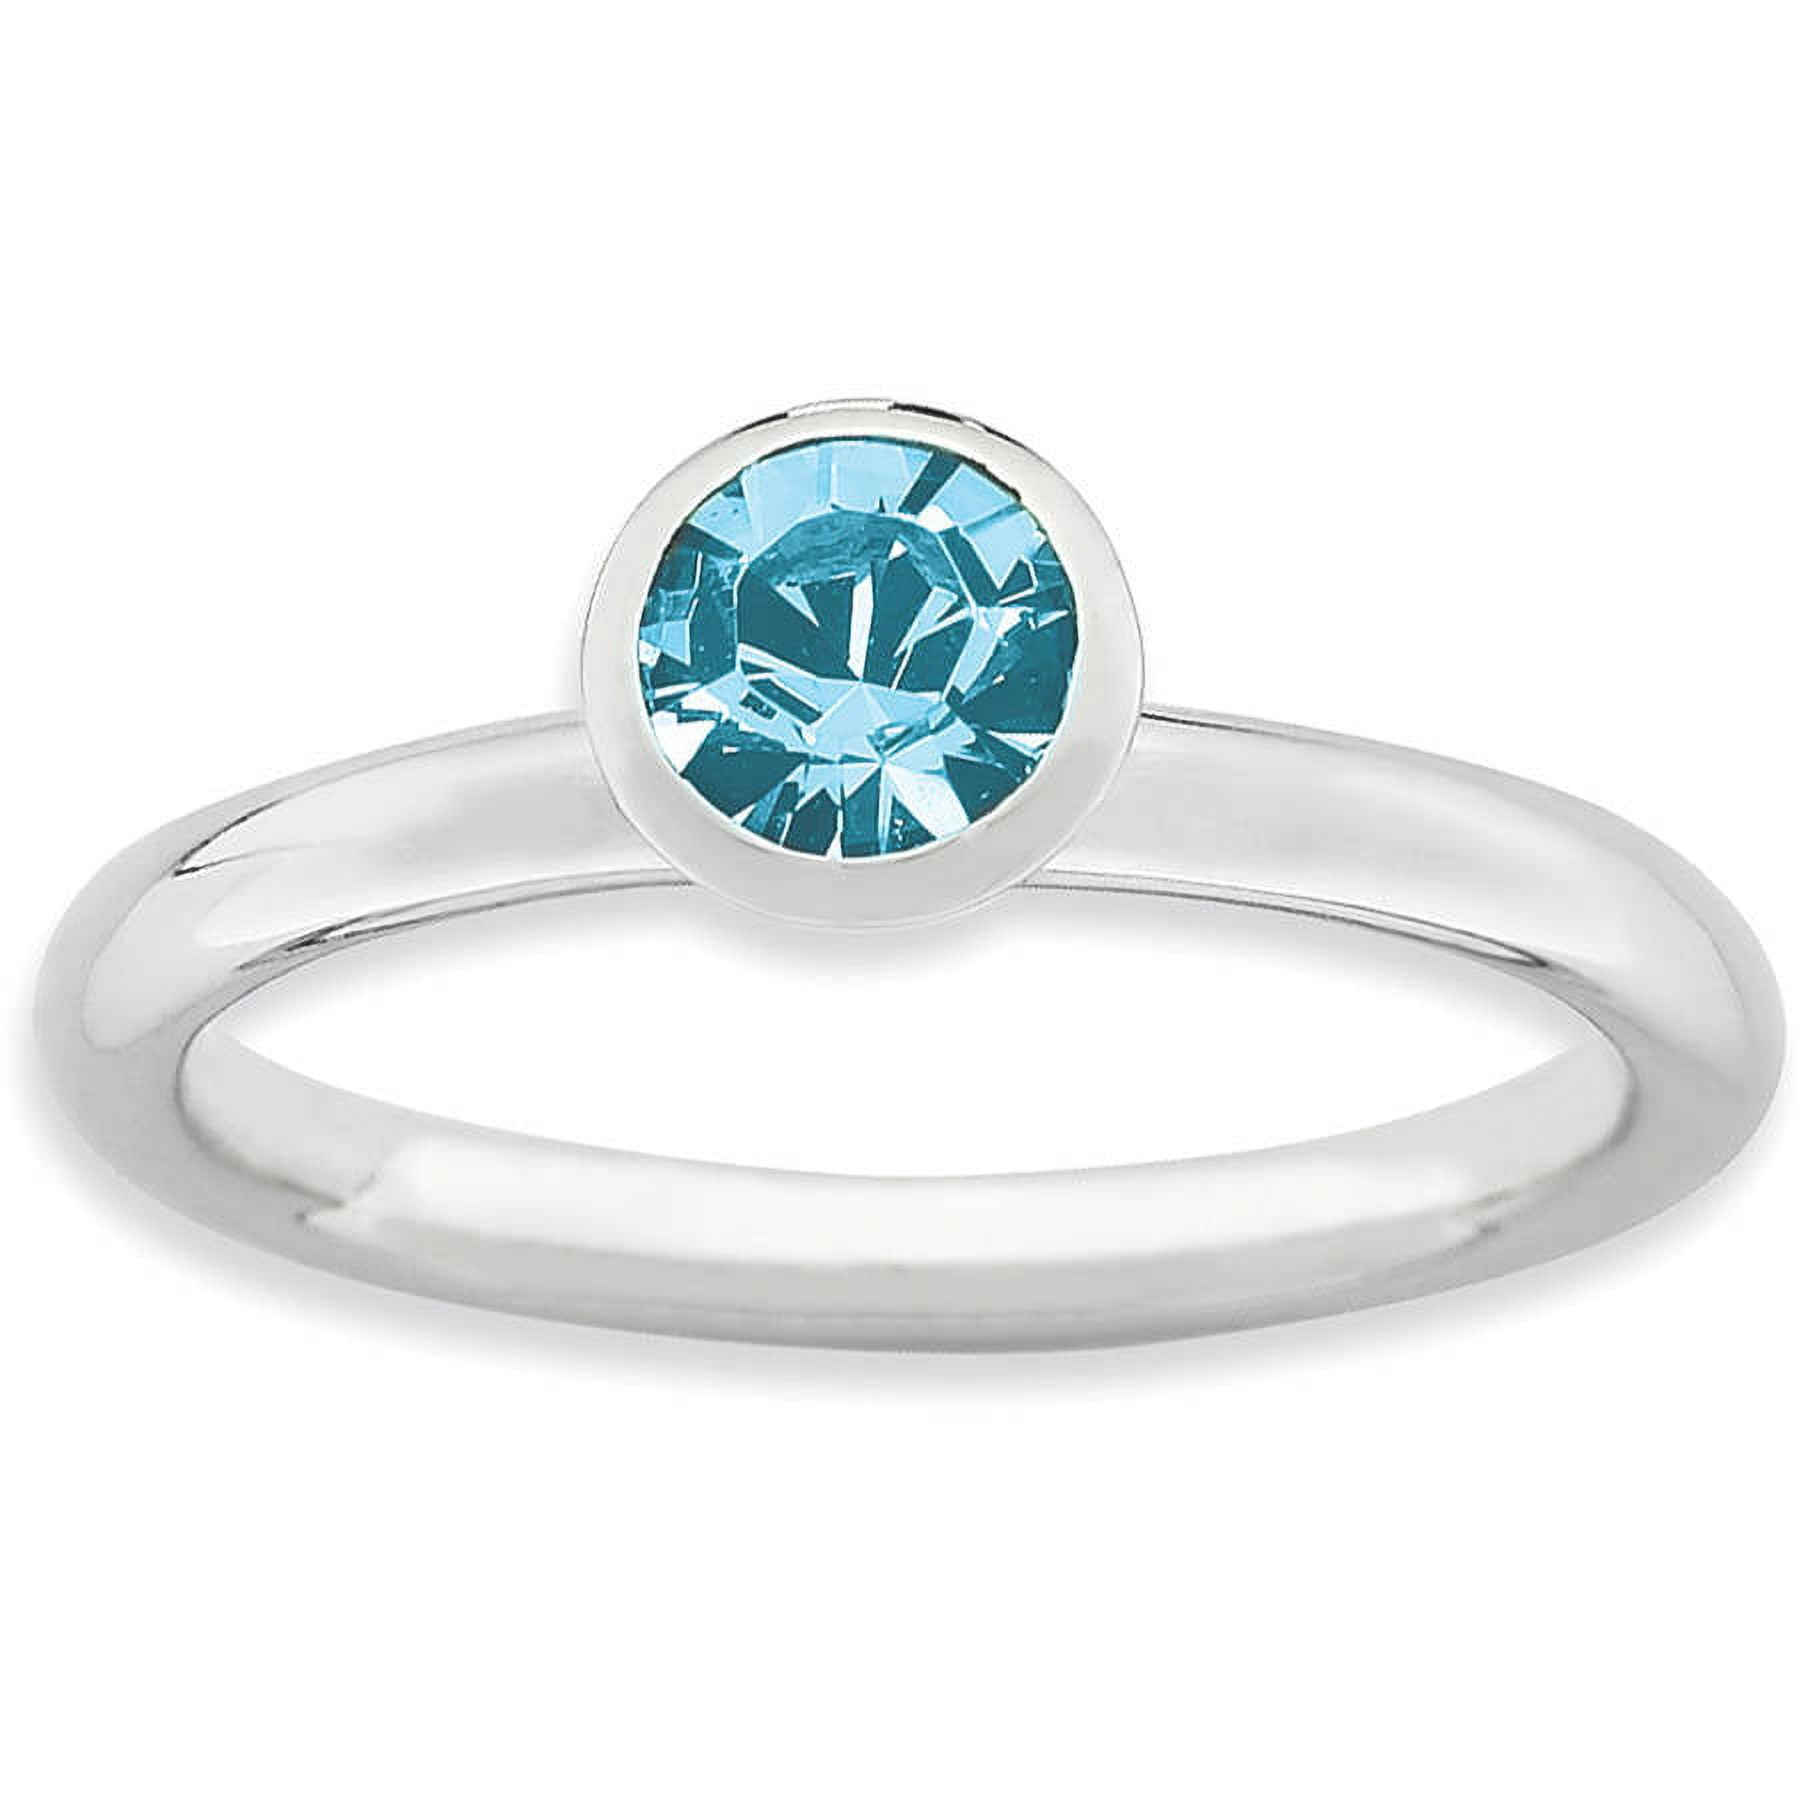 Buy Aquamarine Rings Online | BlueStone.com - India's #1 Online Jewellery  Brand